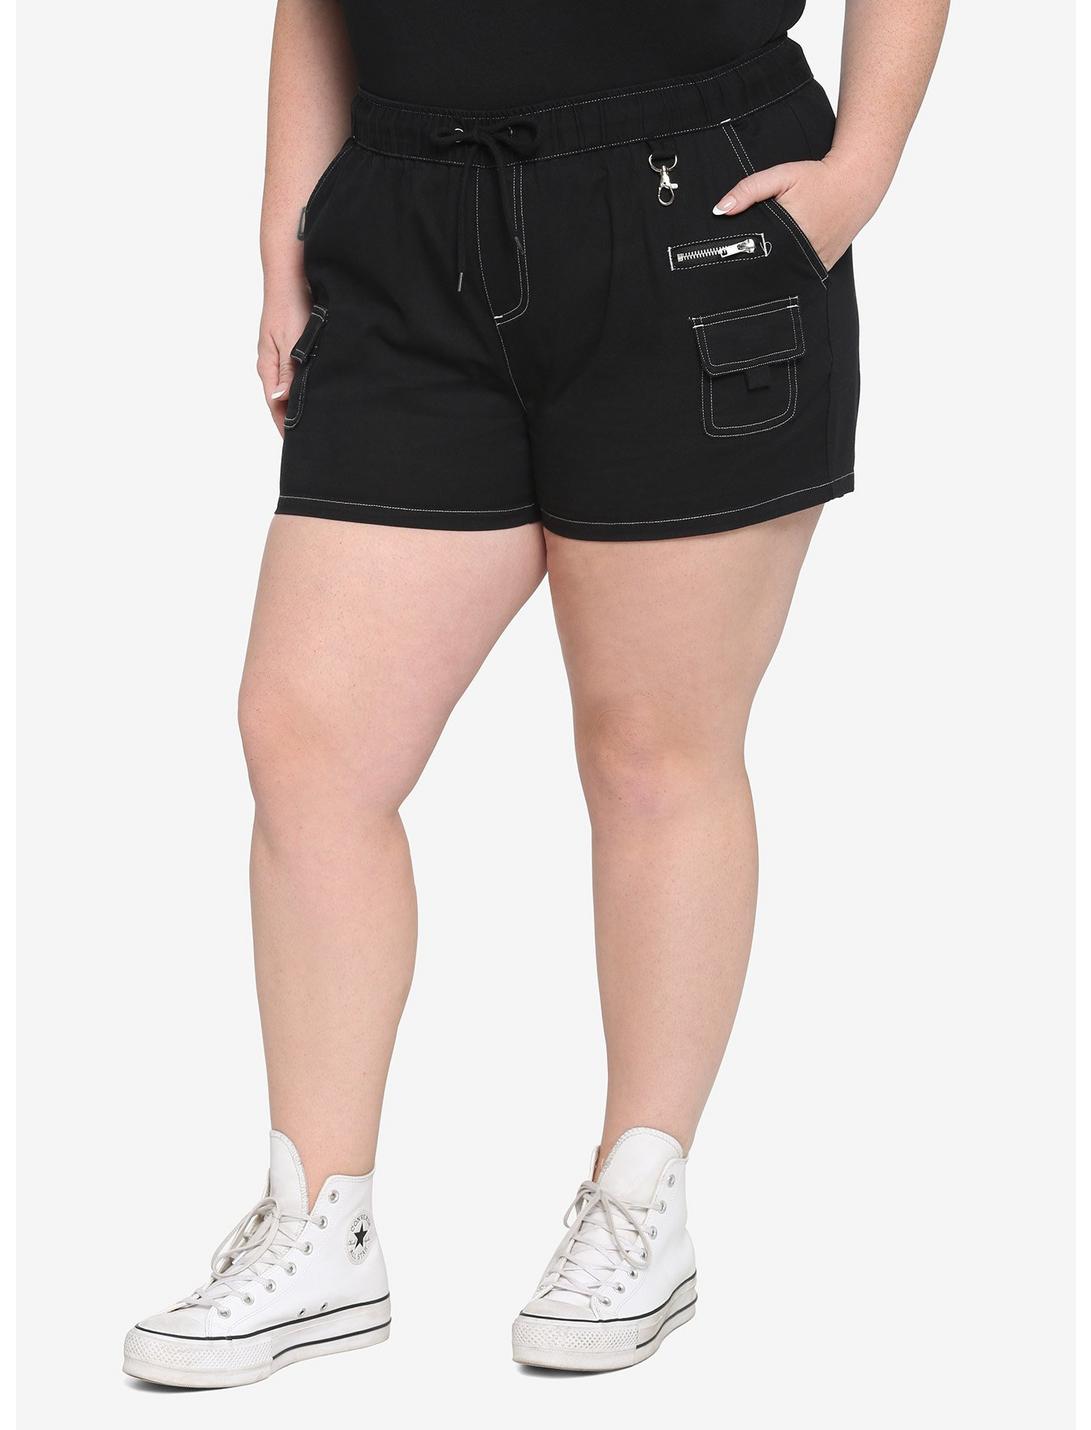 Black & White Contrast Stitch Jogger Shorts Plus Size, BLACK, hi-res